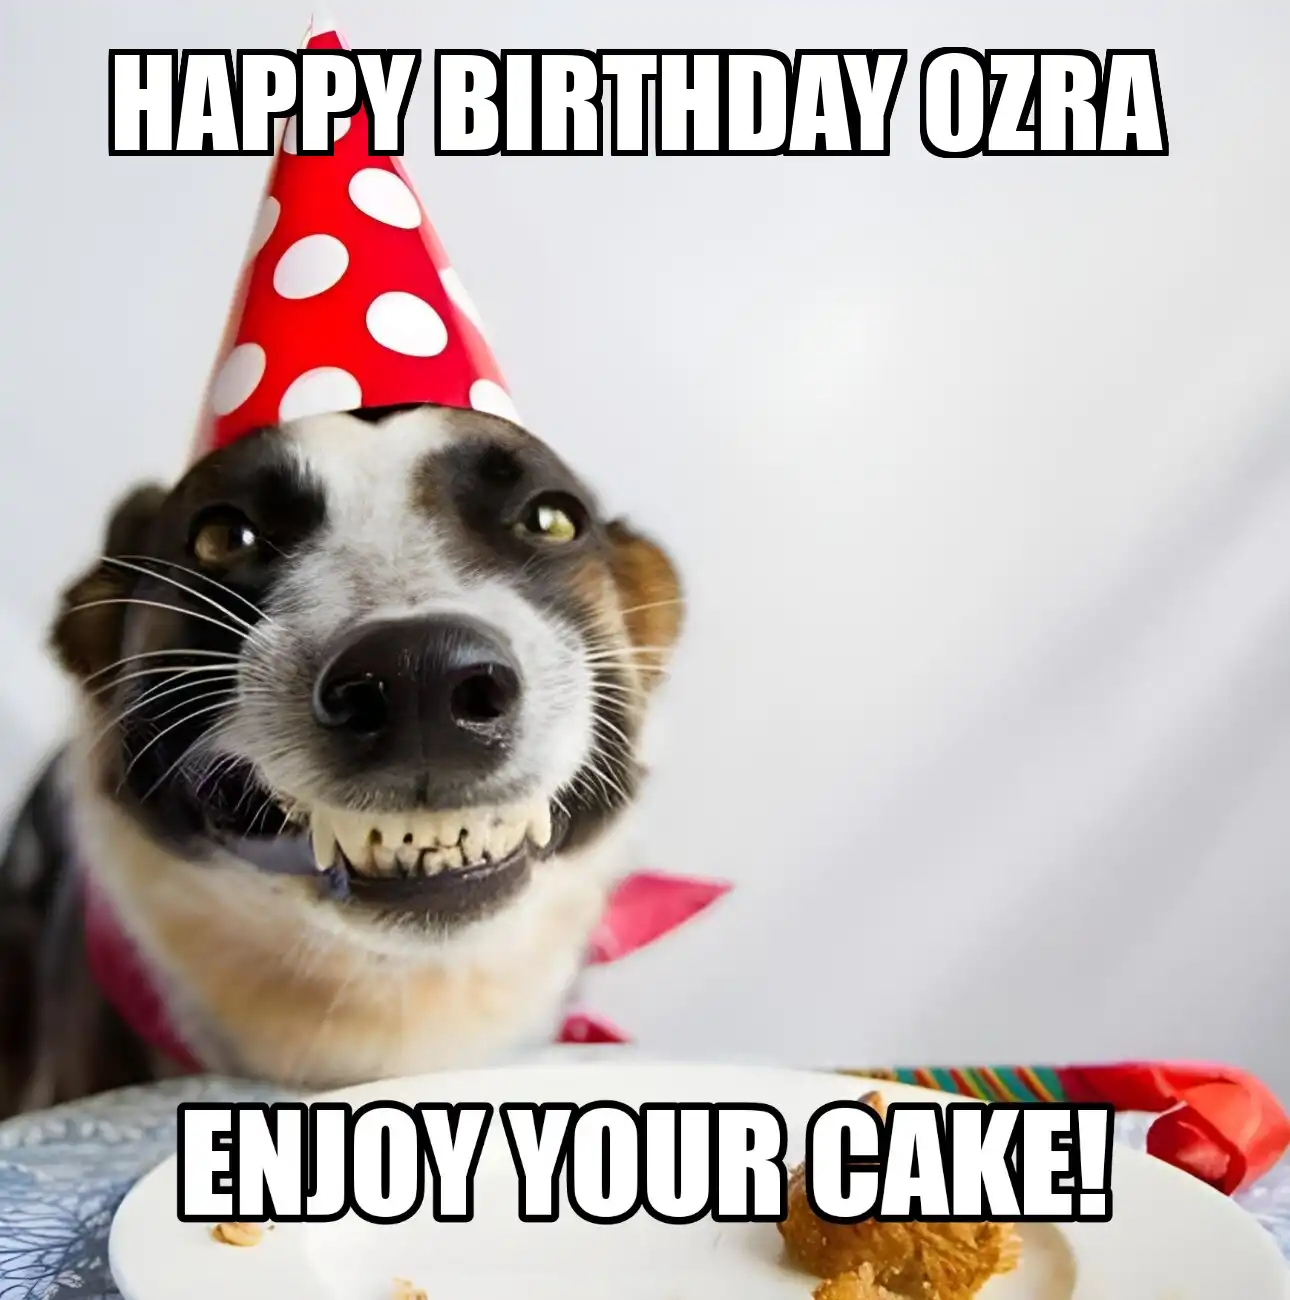 Happy Birthday Ozra Enjoy Your Cake Dog Meme